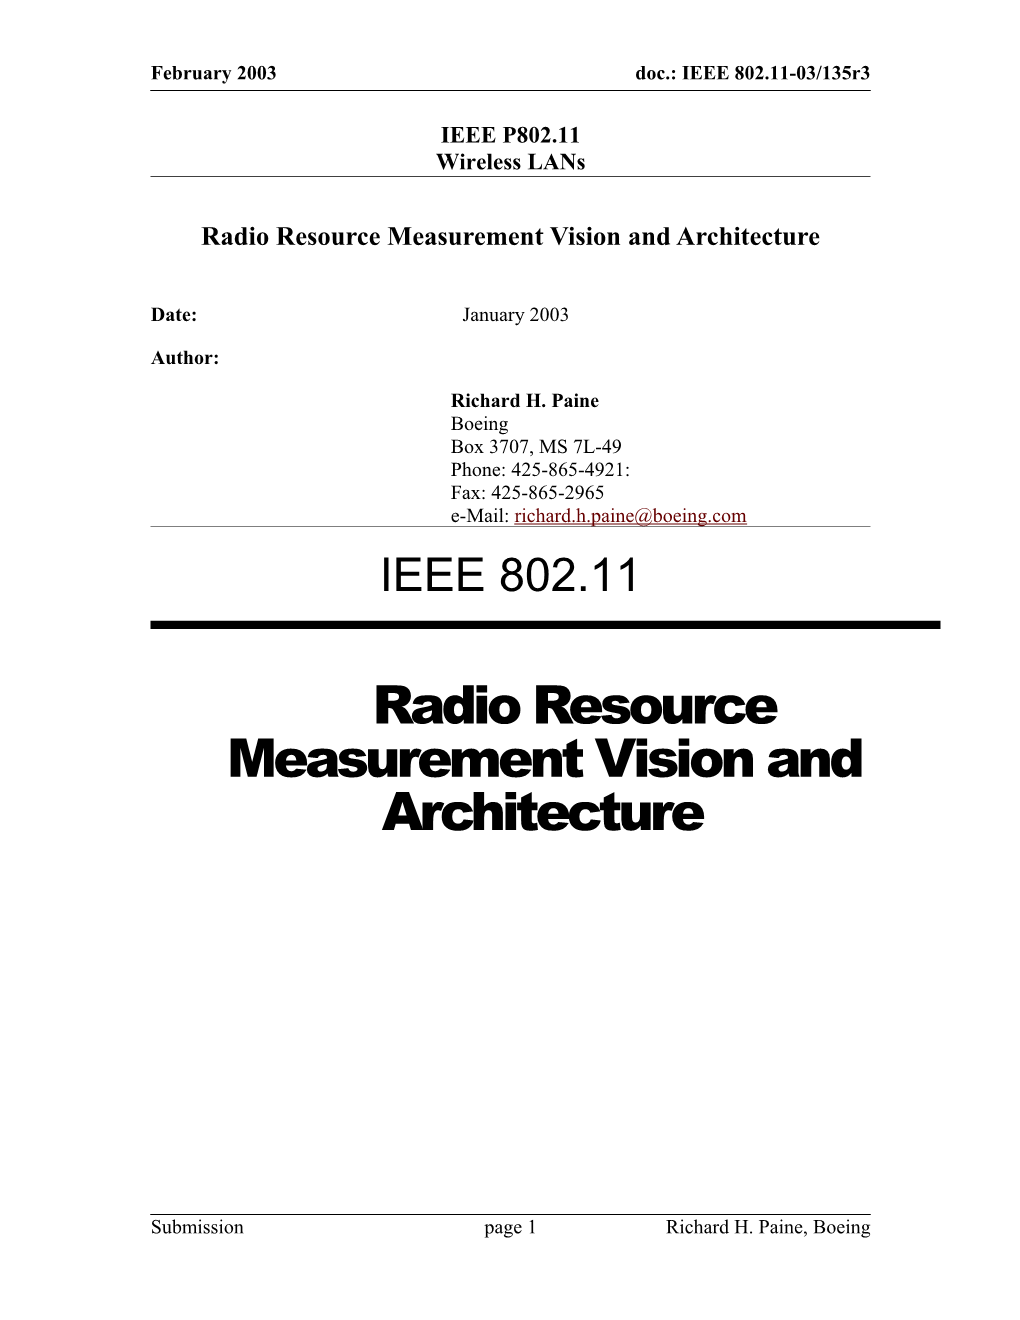 Radio Resource Measurement Vision and Architecture